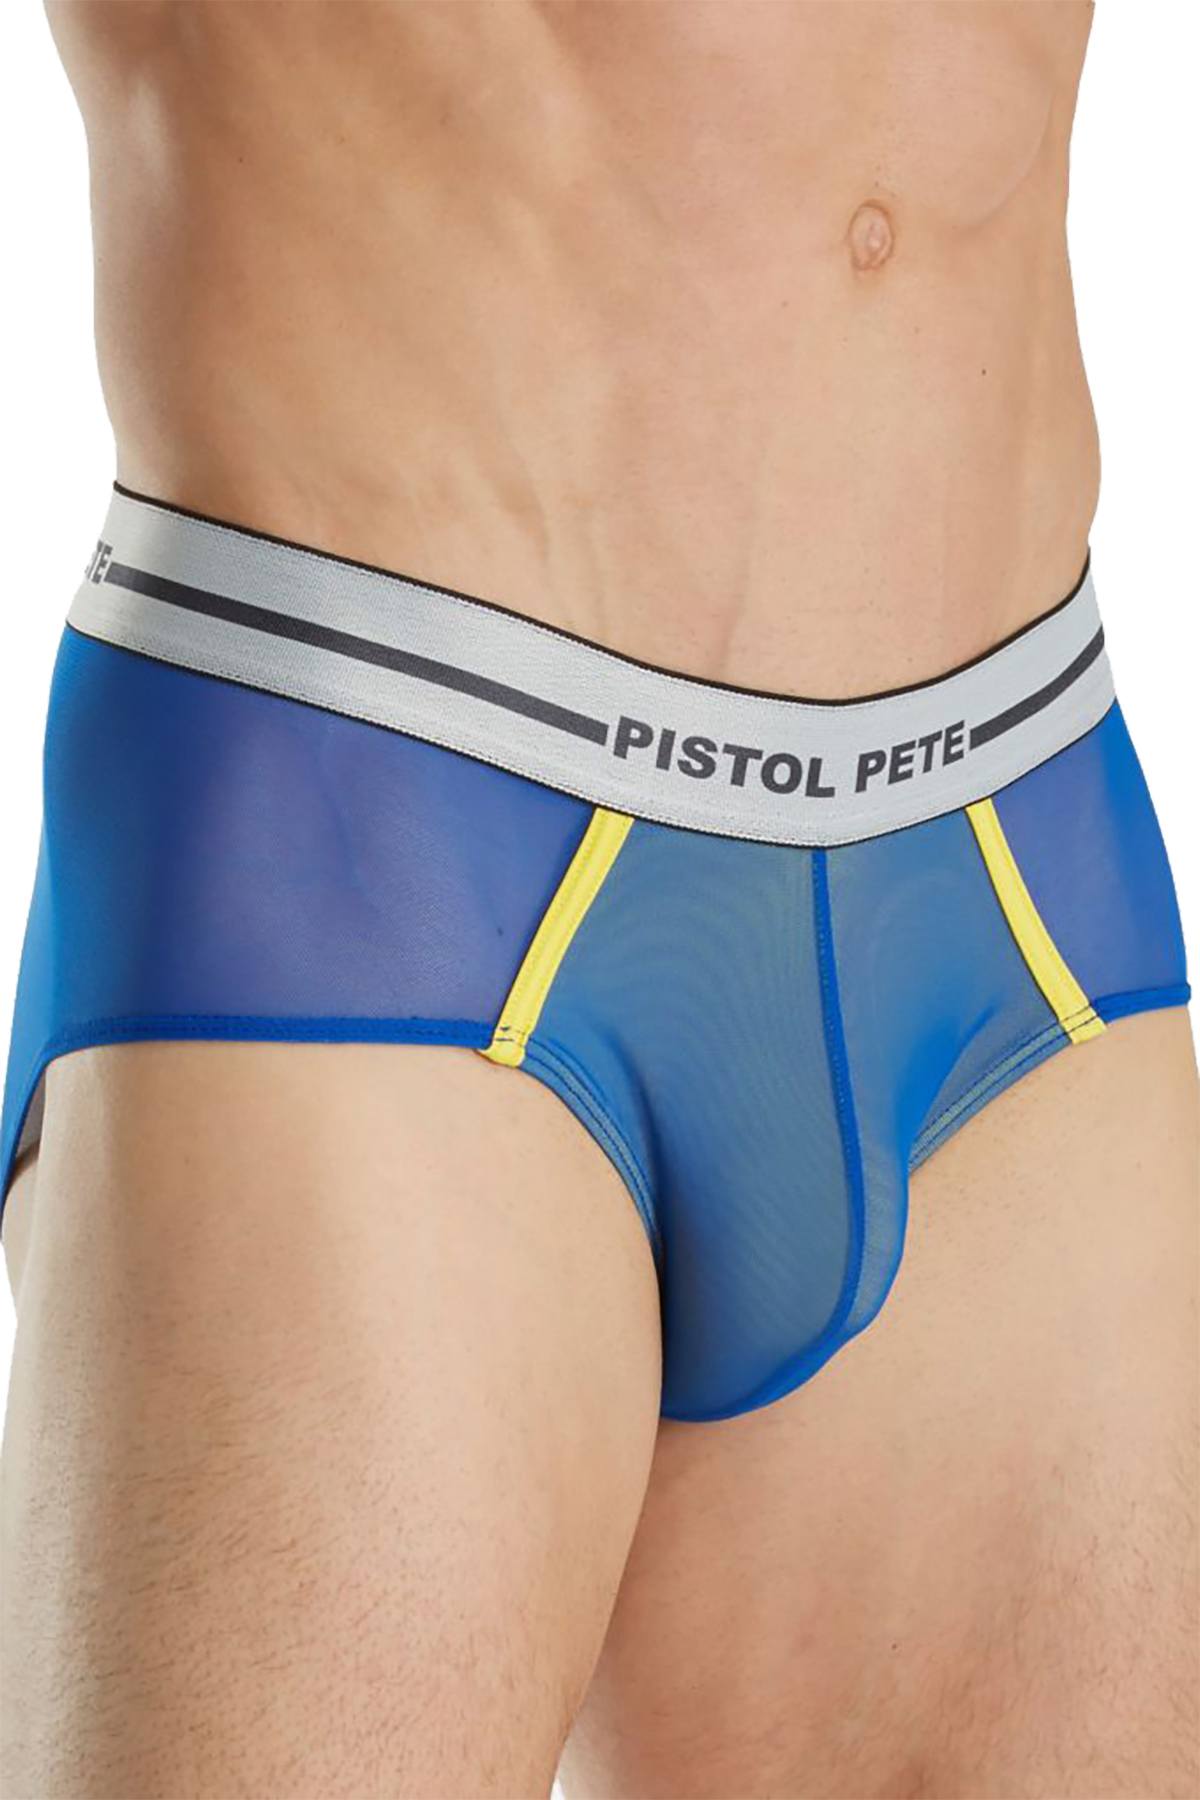 Pistol Pete Royal-Blue/Yellow Mesh Bikini Brief